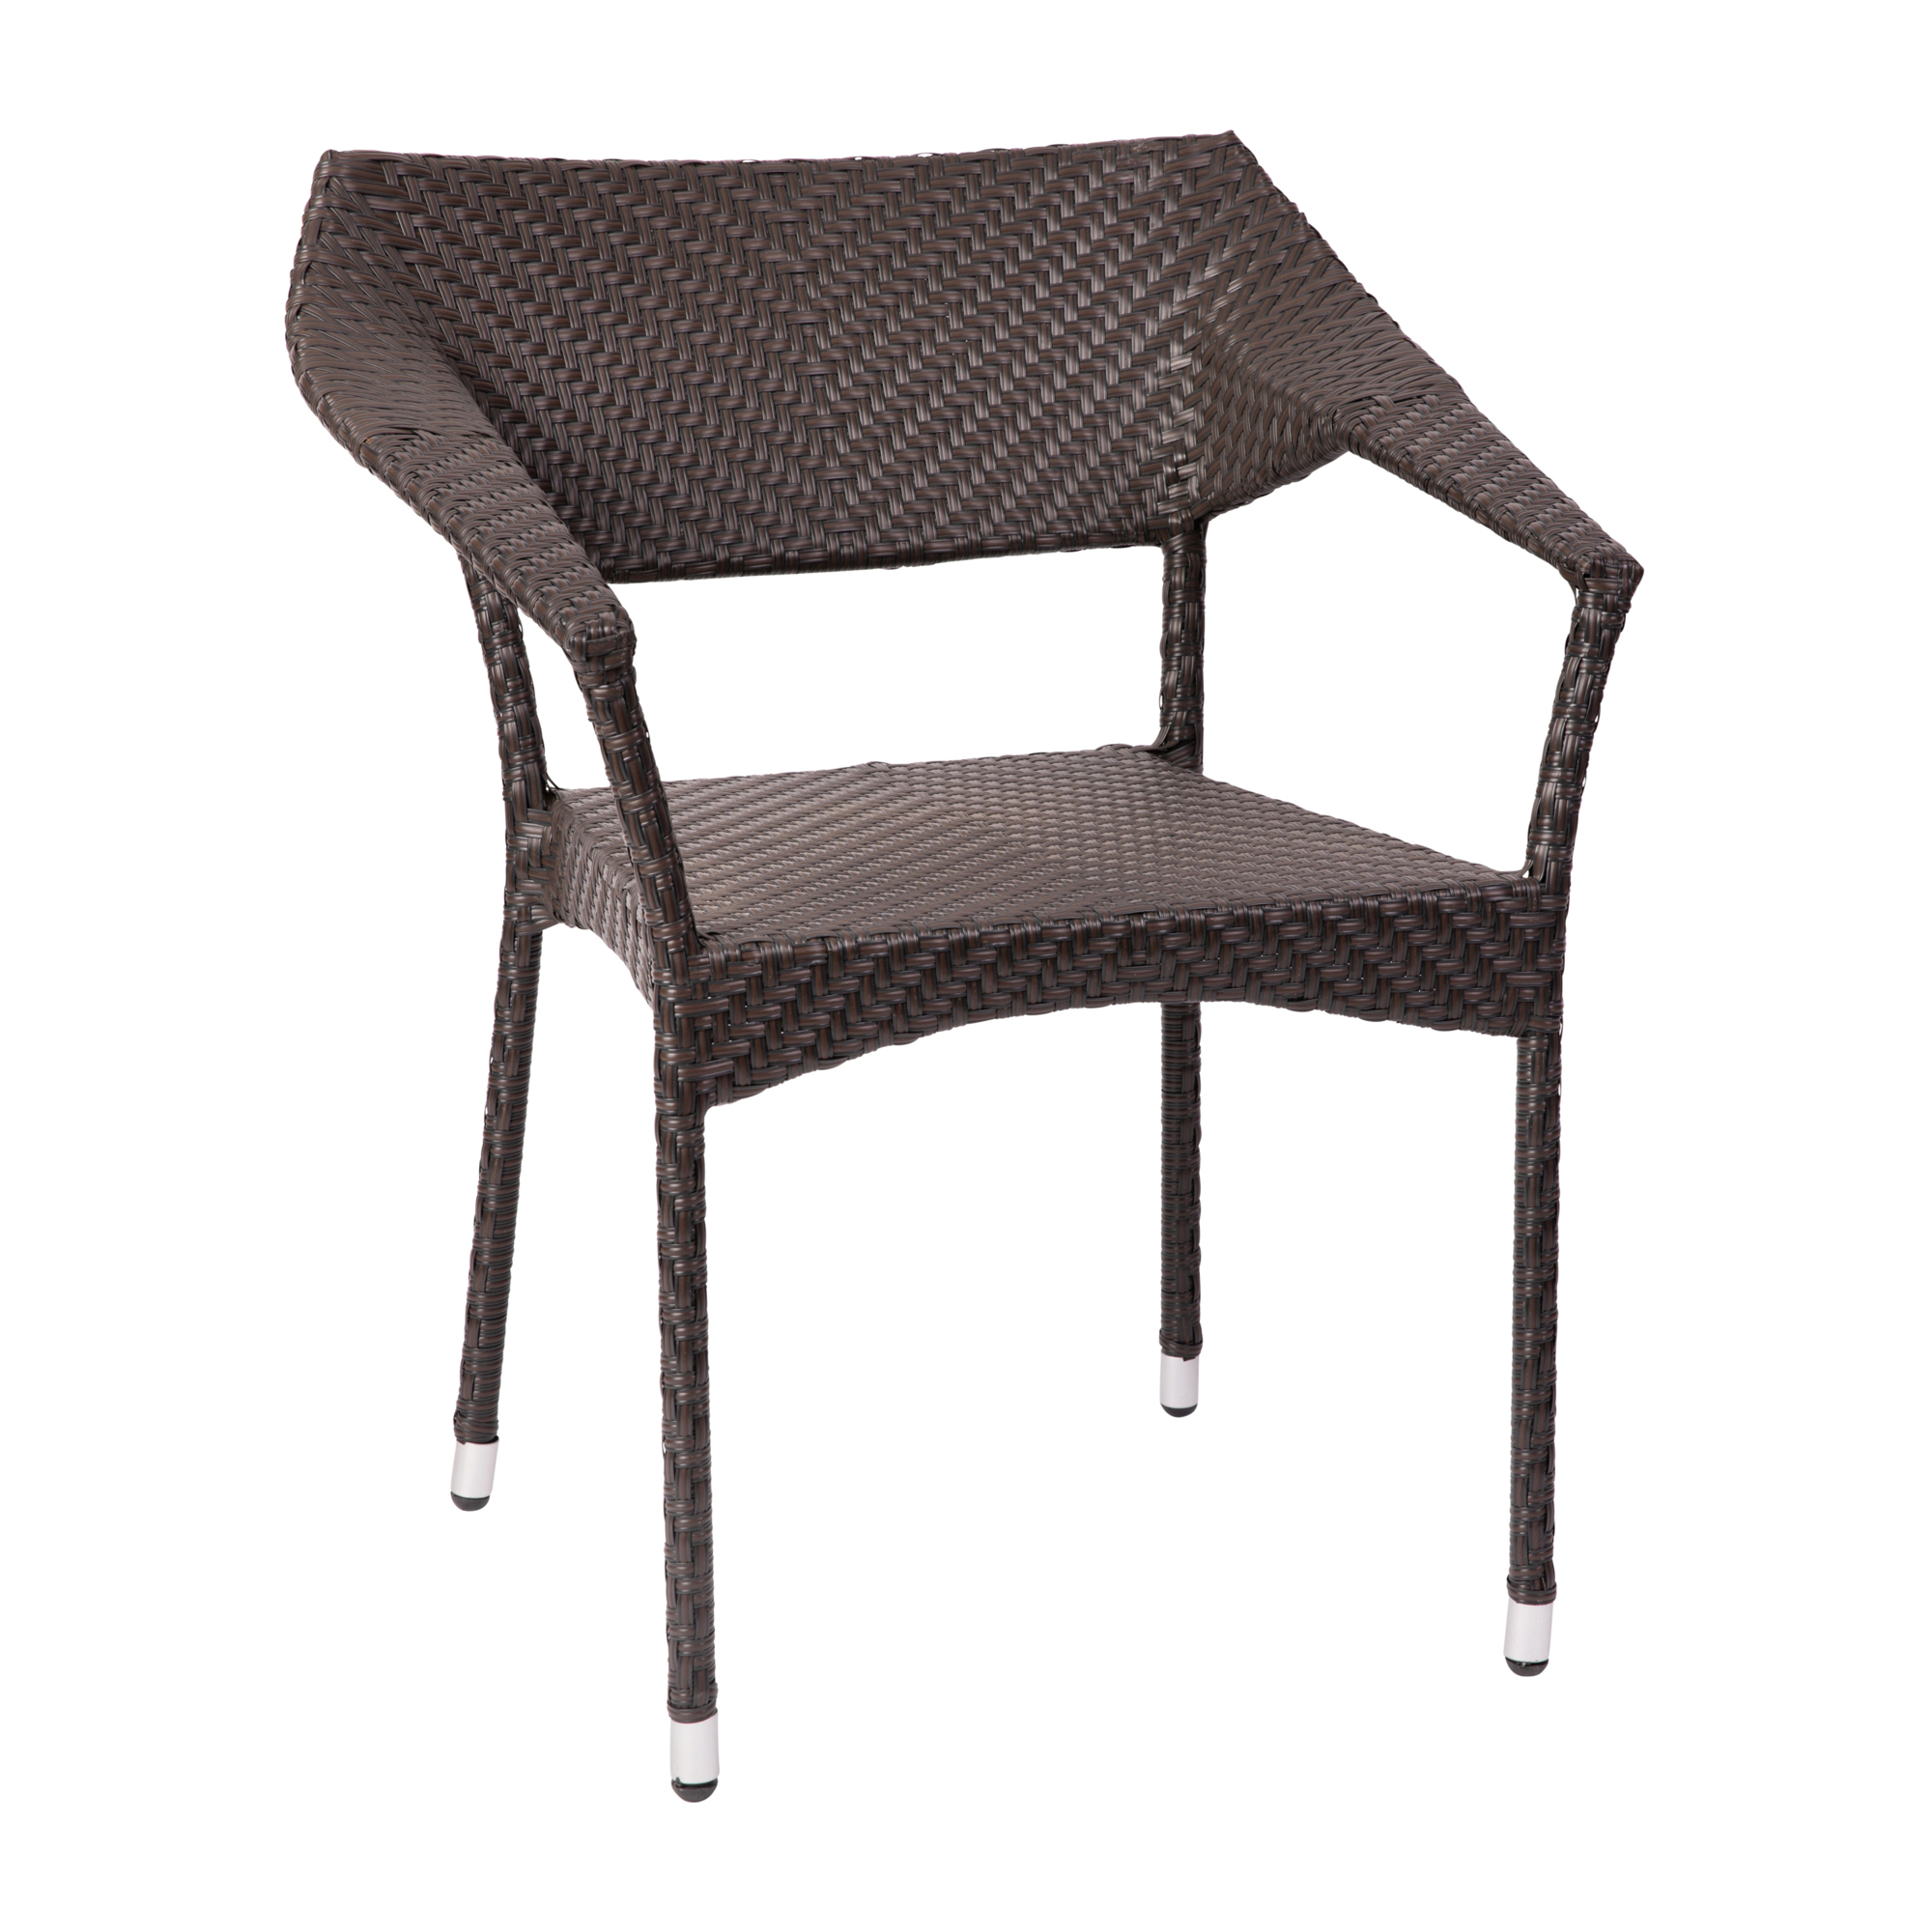 Flash Furniture, Espresso PE Rattan Wicker Patio Dining Chair, Primary Color Brown, Material Steel, Width 23.5 in, Model TTTT002ESP